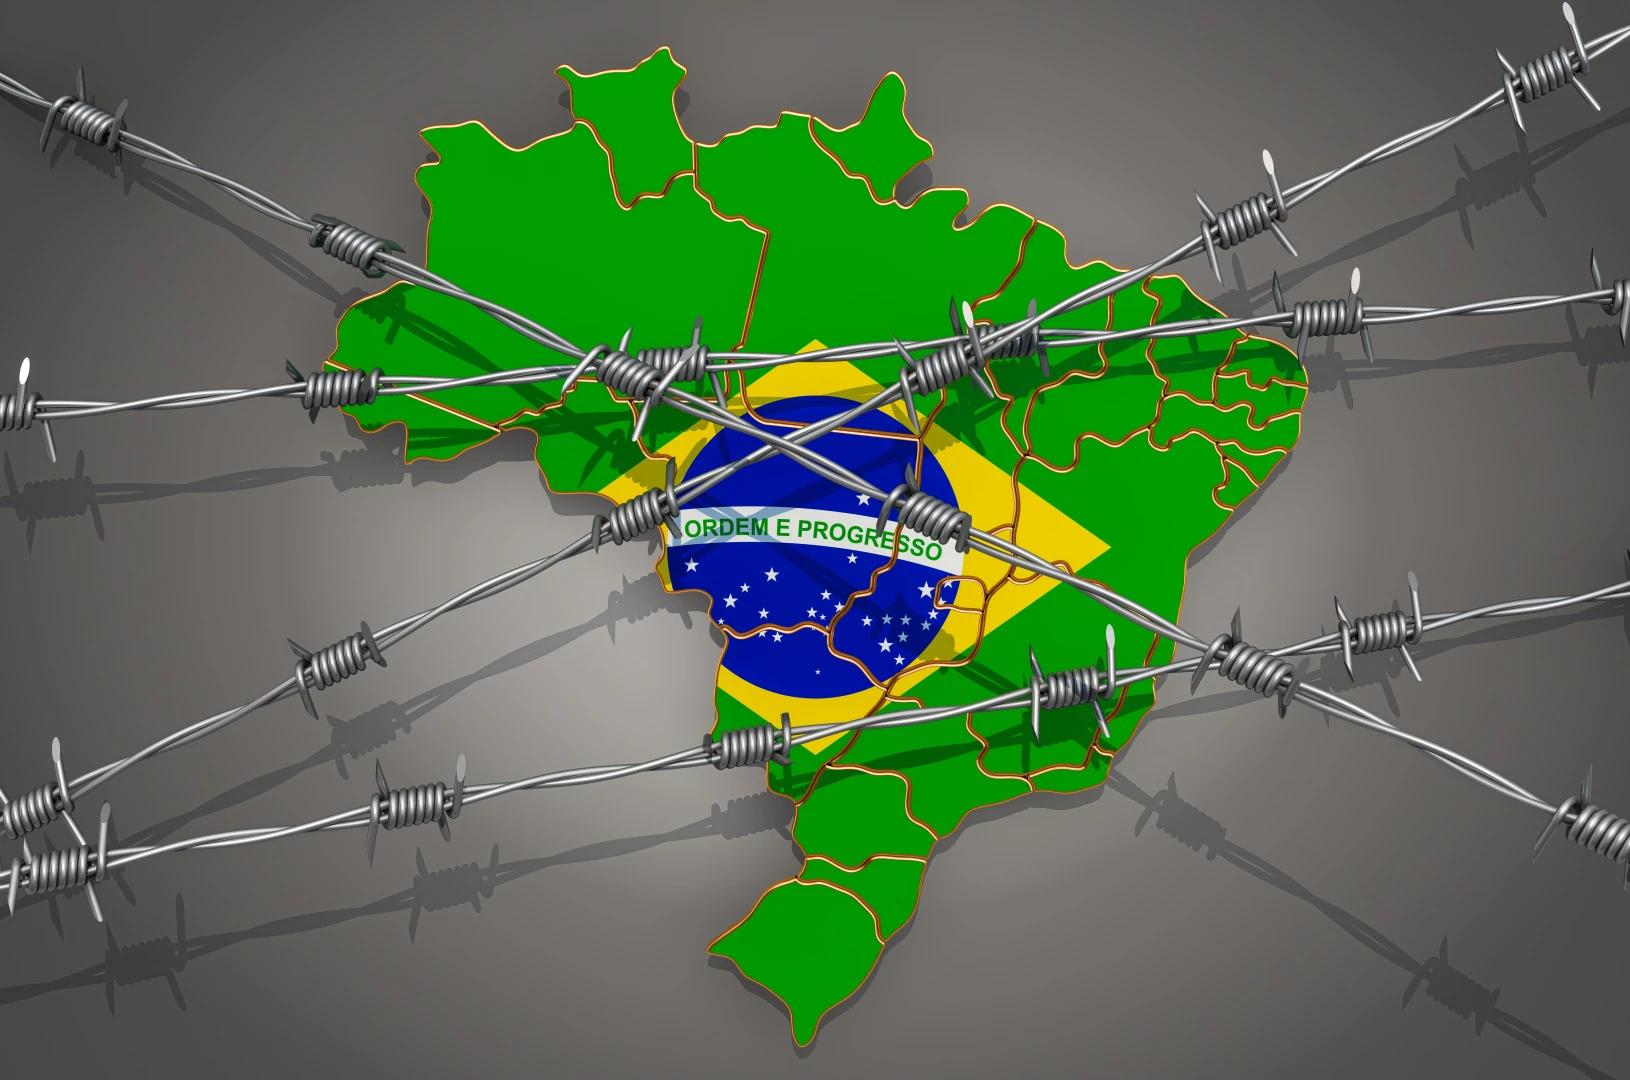 Brazil legislation proposes 2-8 years imprisonment for vaccine criticism